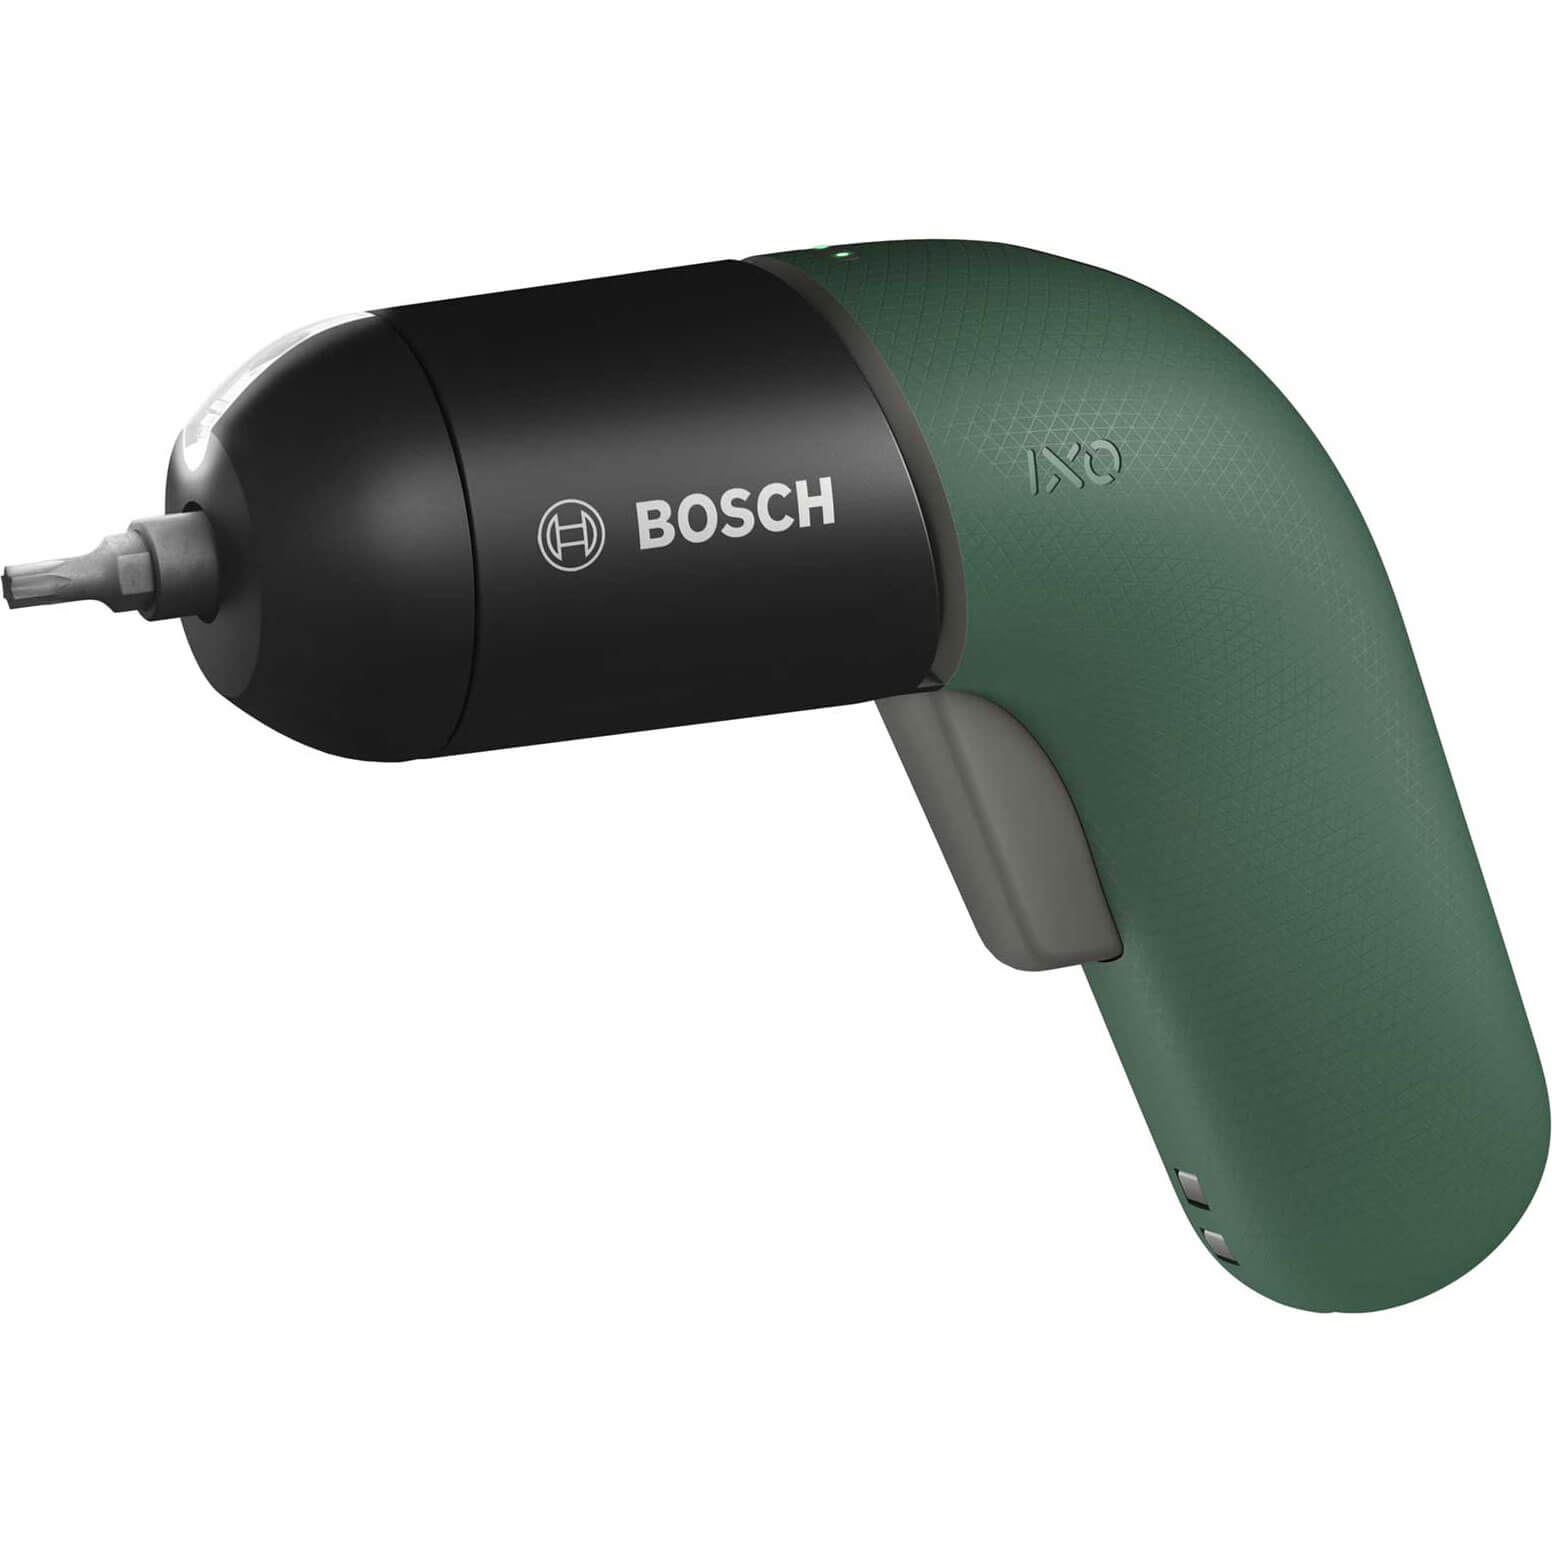 Bosch IXO VI 3.6v Cordless Classic Screwdriver | Screwdrivers